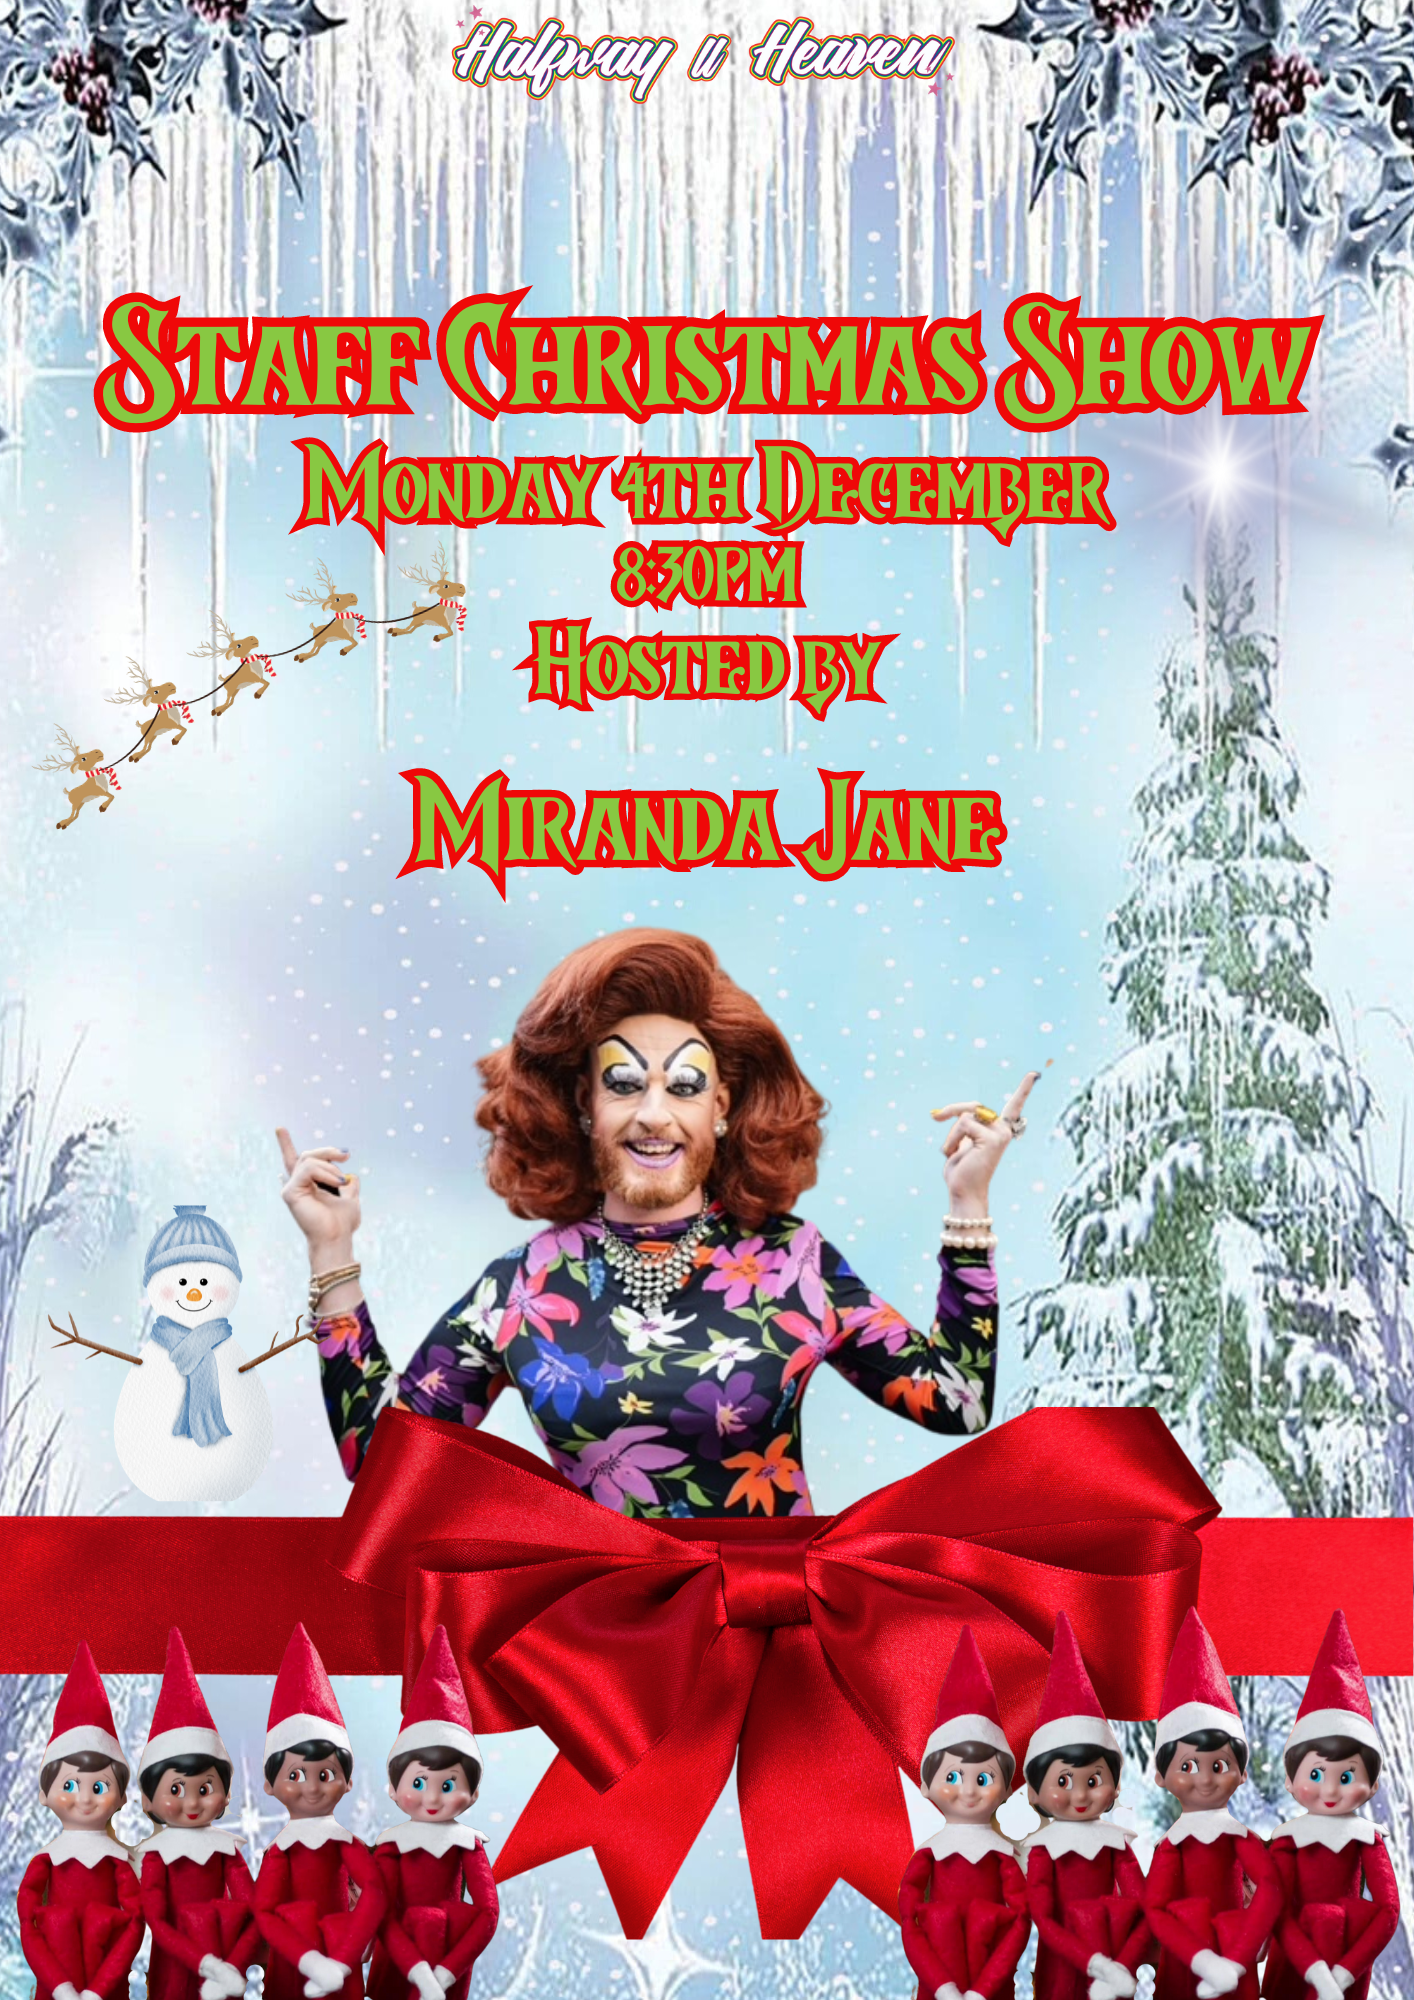 Miranda Jane hosts the Staff Christmas Show